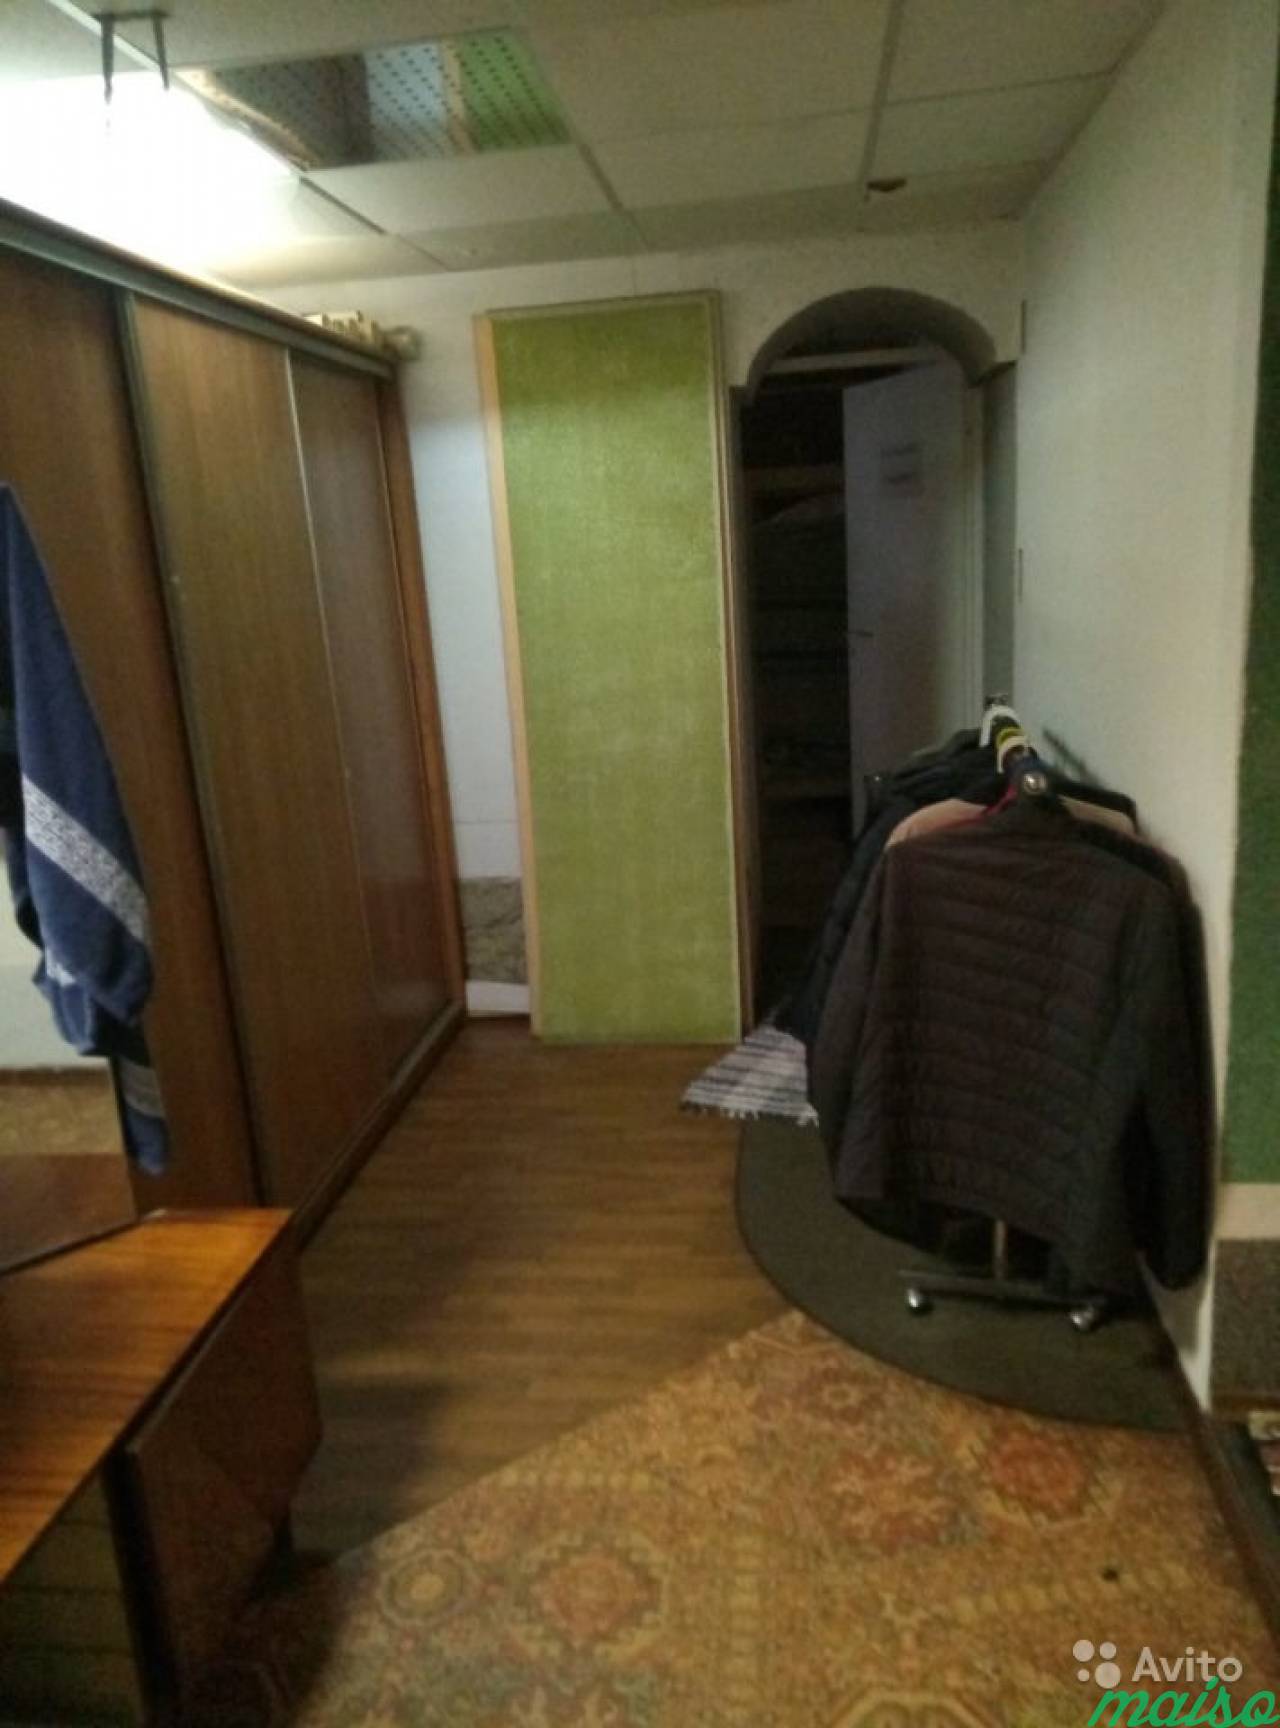 Комната 24 м² в 2-к, 1/3 эт. в Санкт-Петербурге. Фото 4